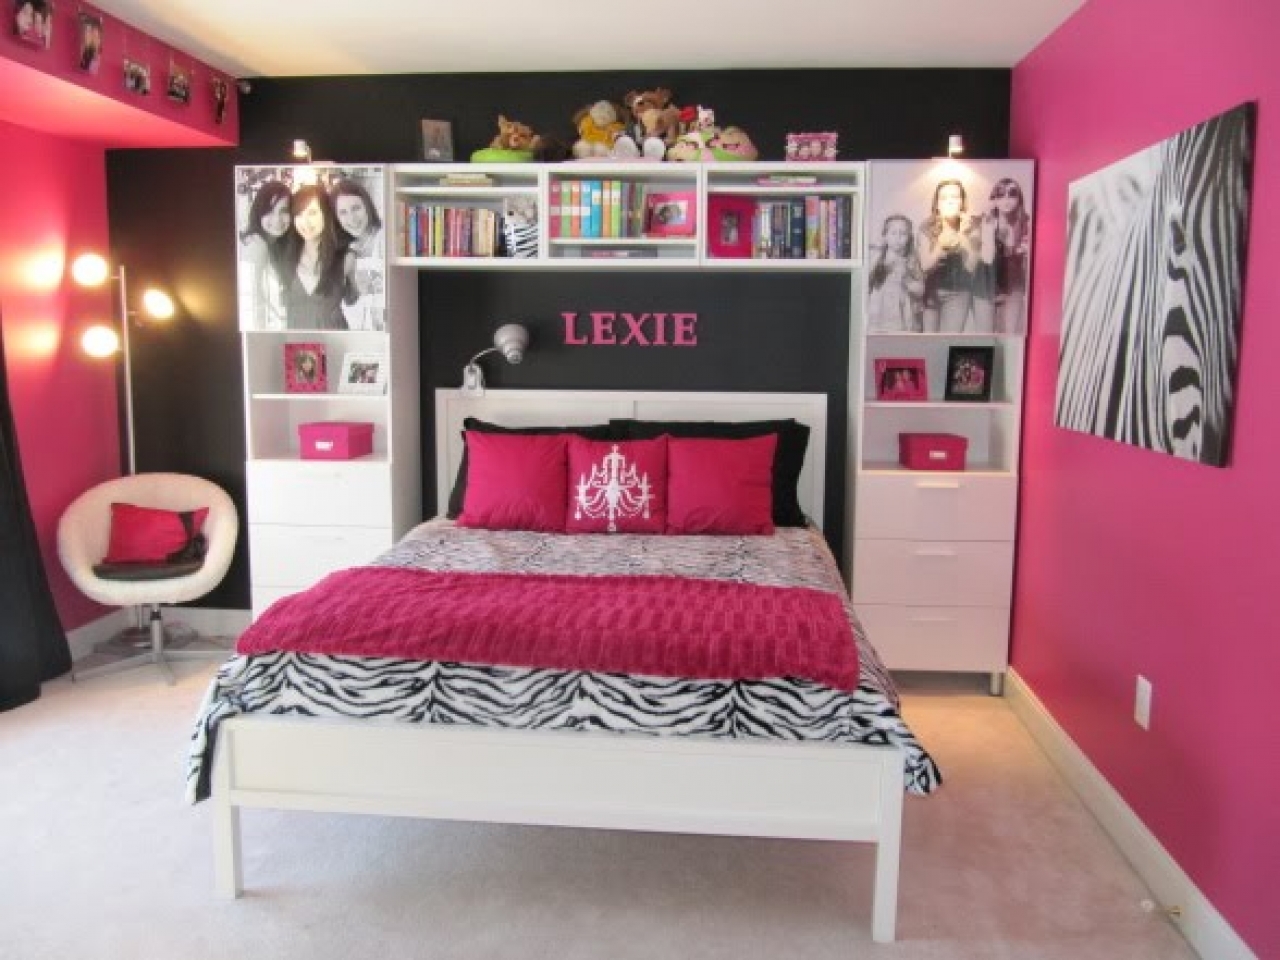 Charming tumblr bedroom Tumblr Bedroom For Girls Designing Awesome Room Ideas 1280x960 Wallpaper Teahub Io